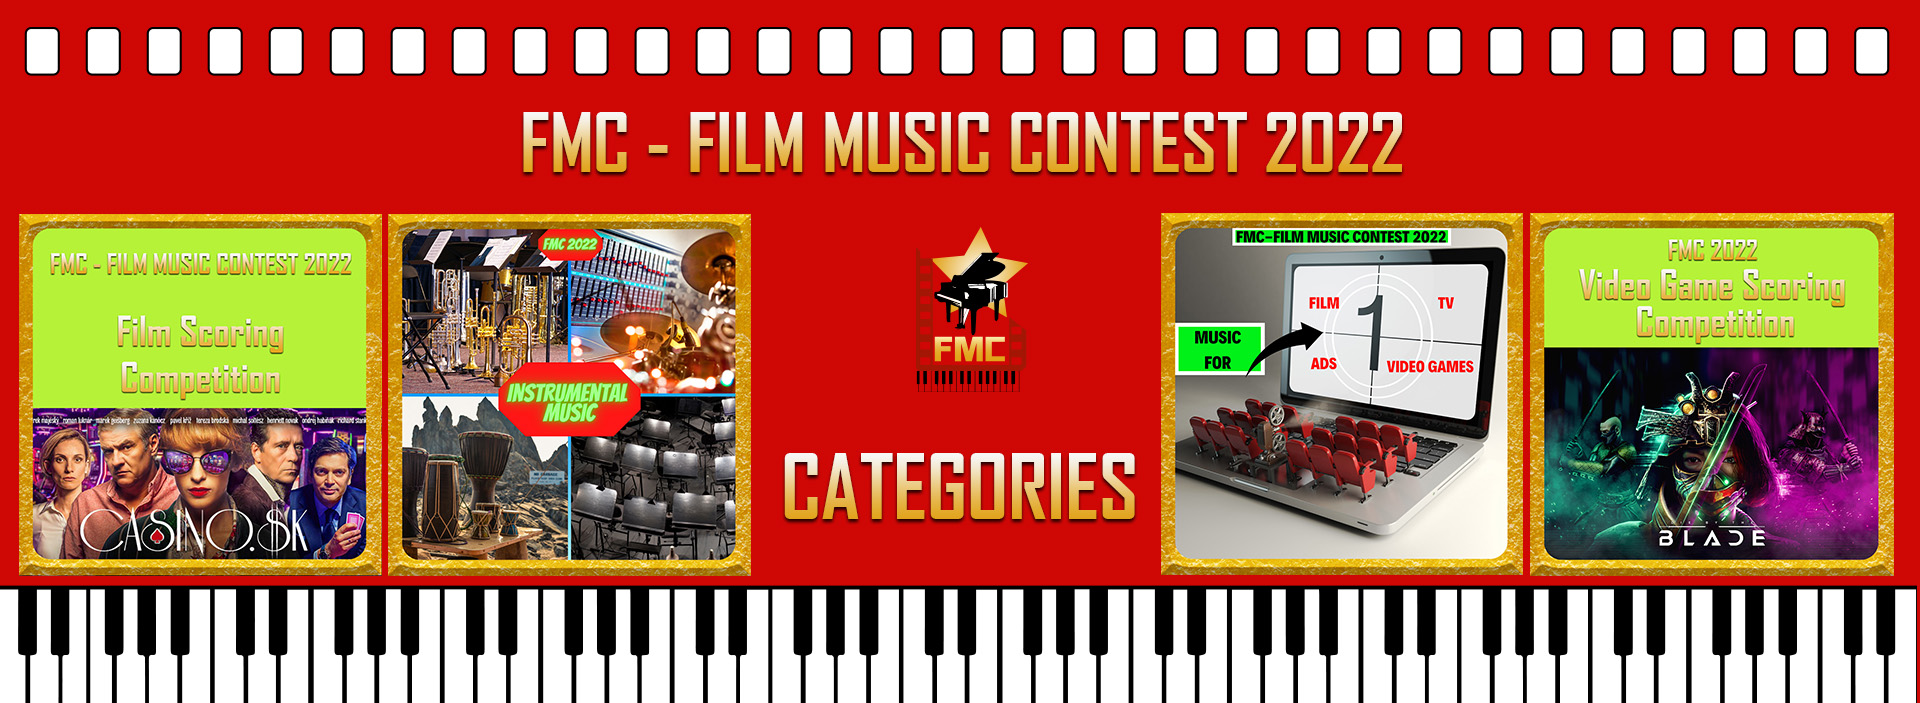 FMC – Film Music Contest 2022: open for registration - Film Music Contest